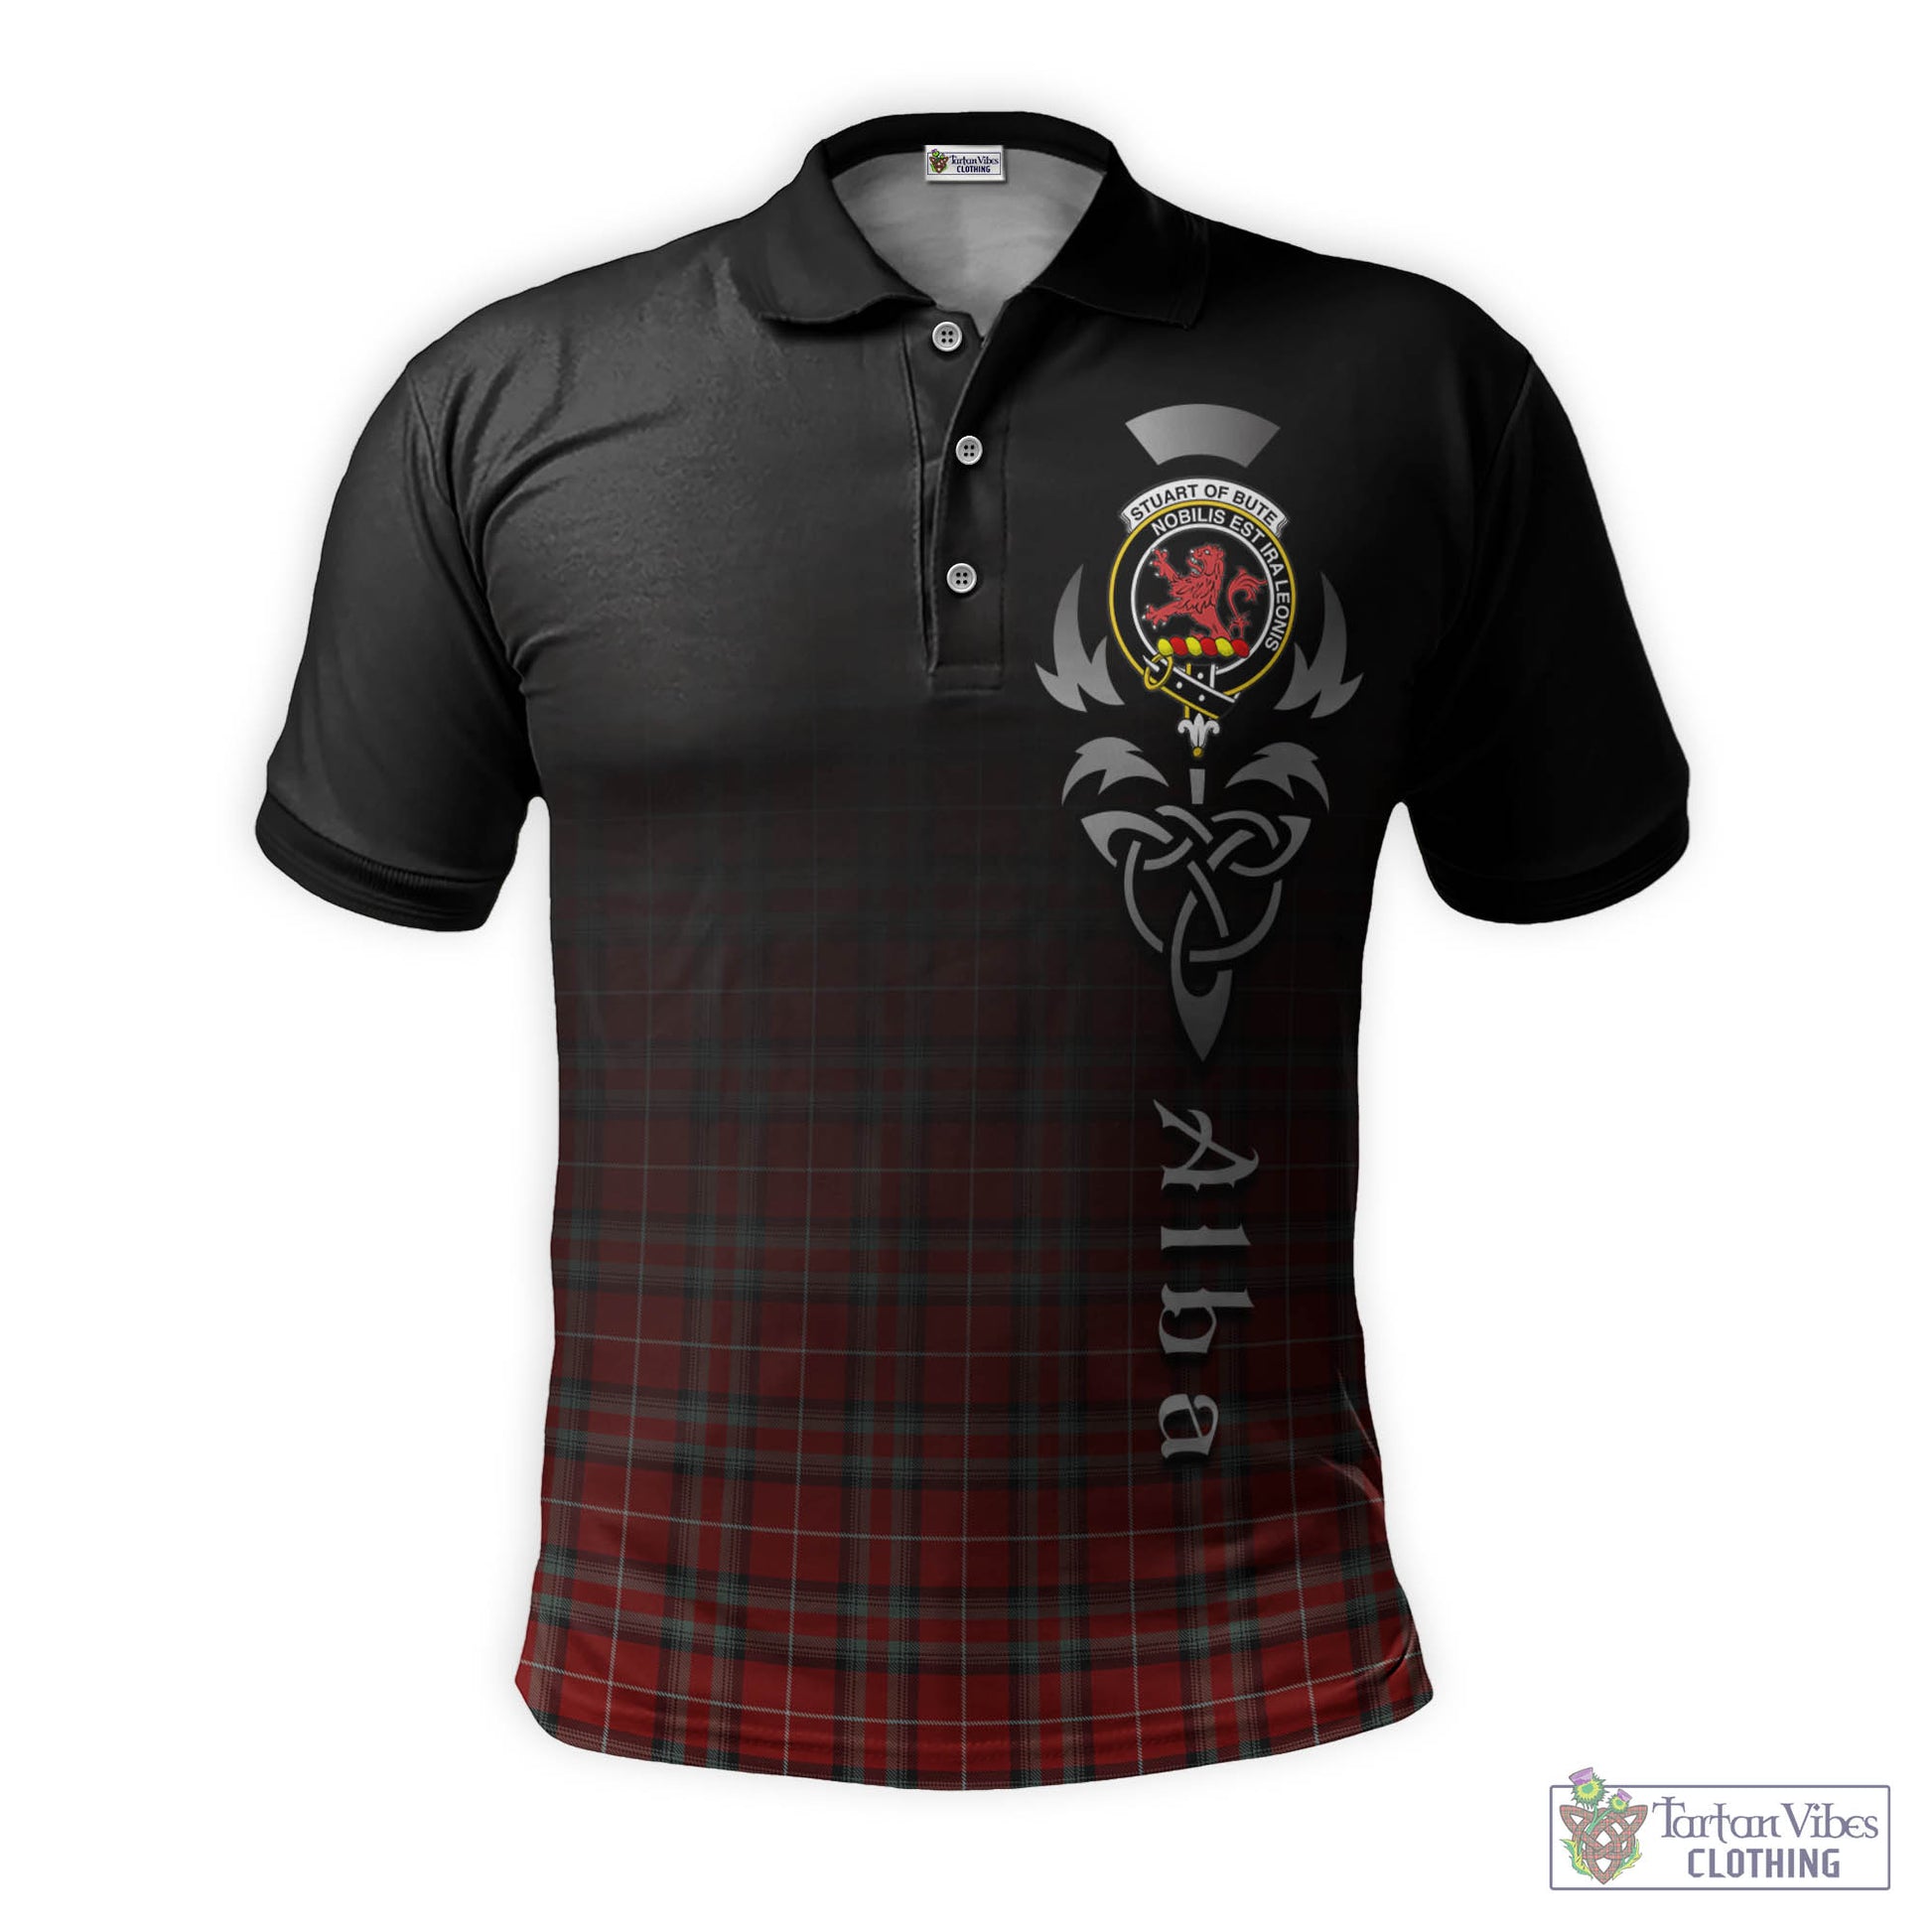 Tartan Vibes Clothing Stuart of Bute Tartan Polo Shirt Featuring Alba Gu Brath Family Crest Celtic Inspired